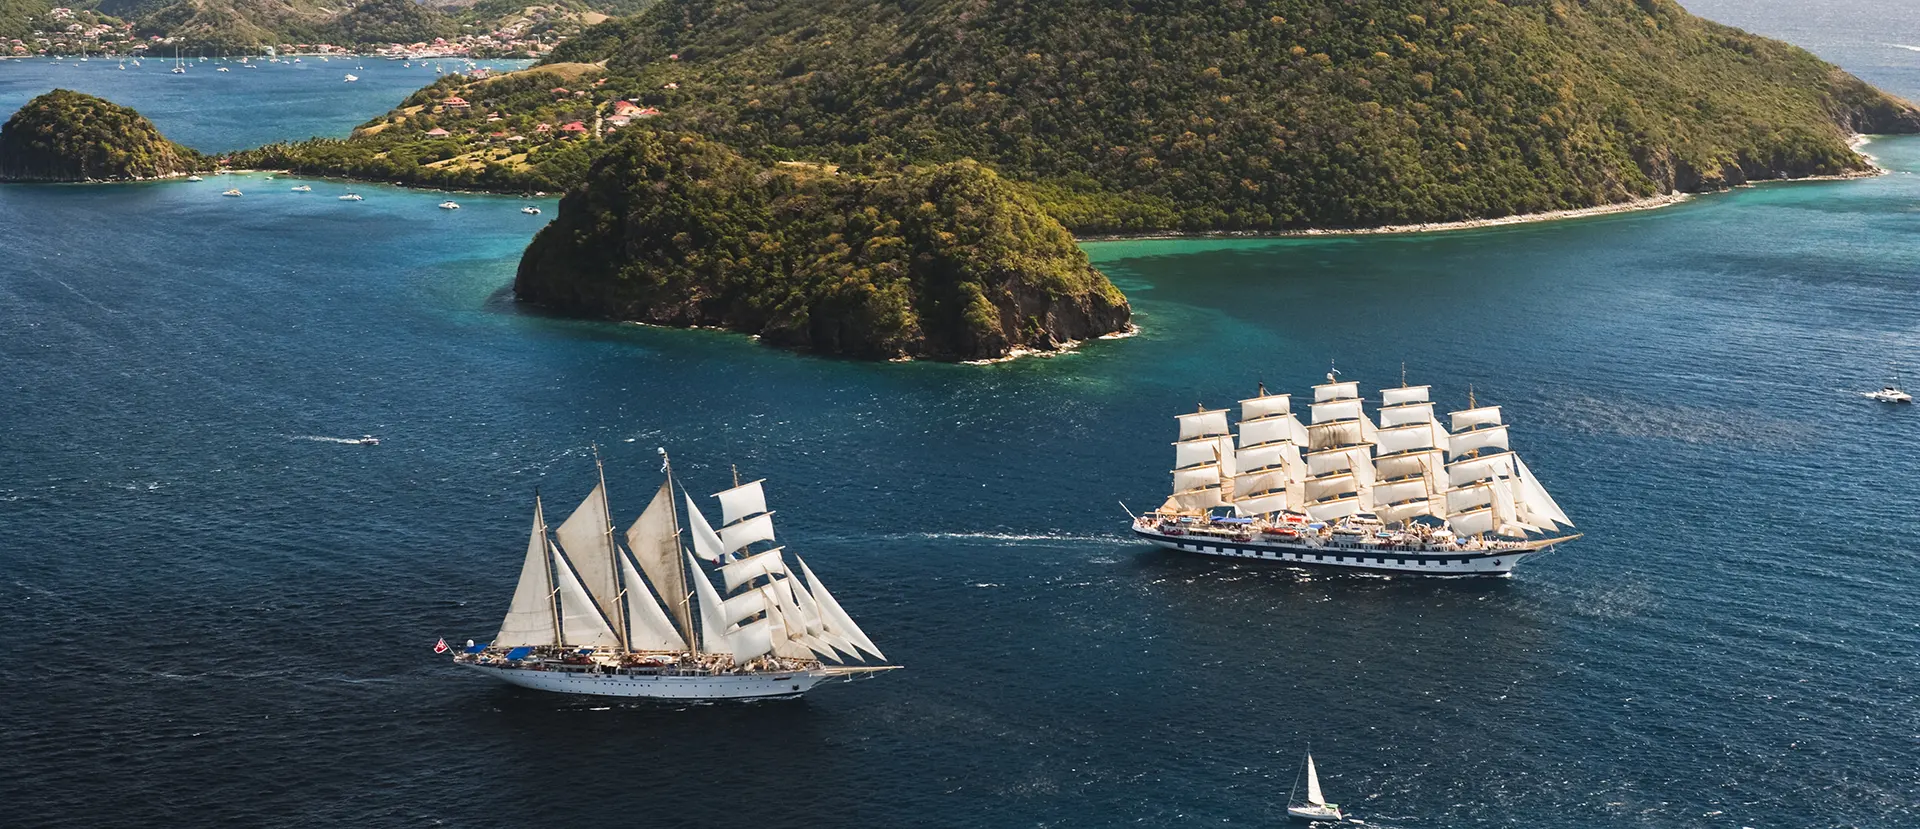 Seychelles 10-day Yacht Cruise, The Seychelles Island Odyssey